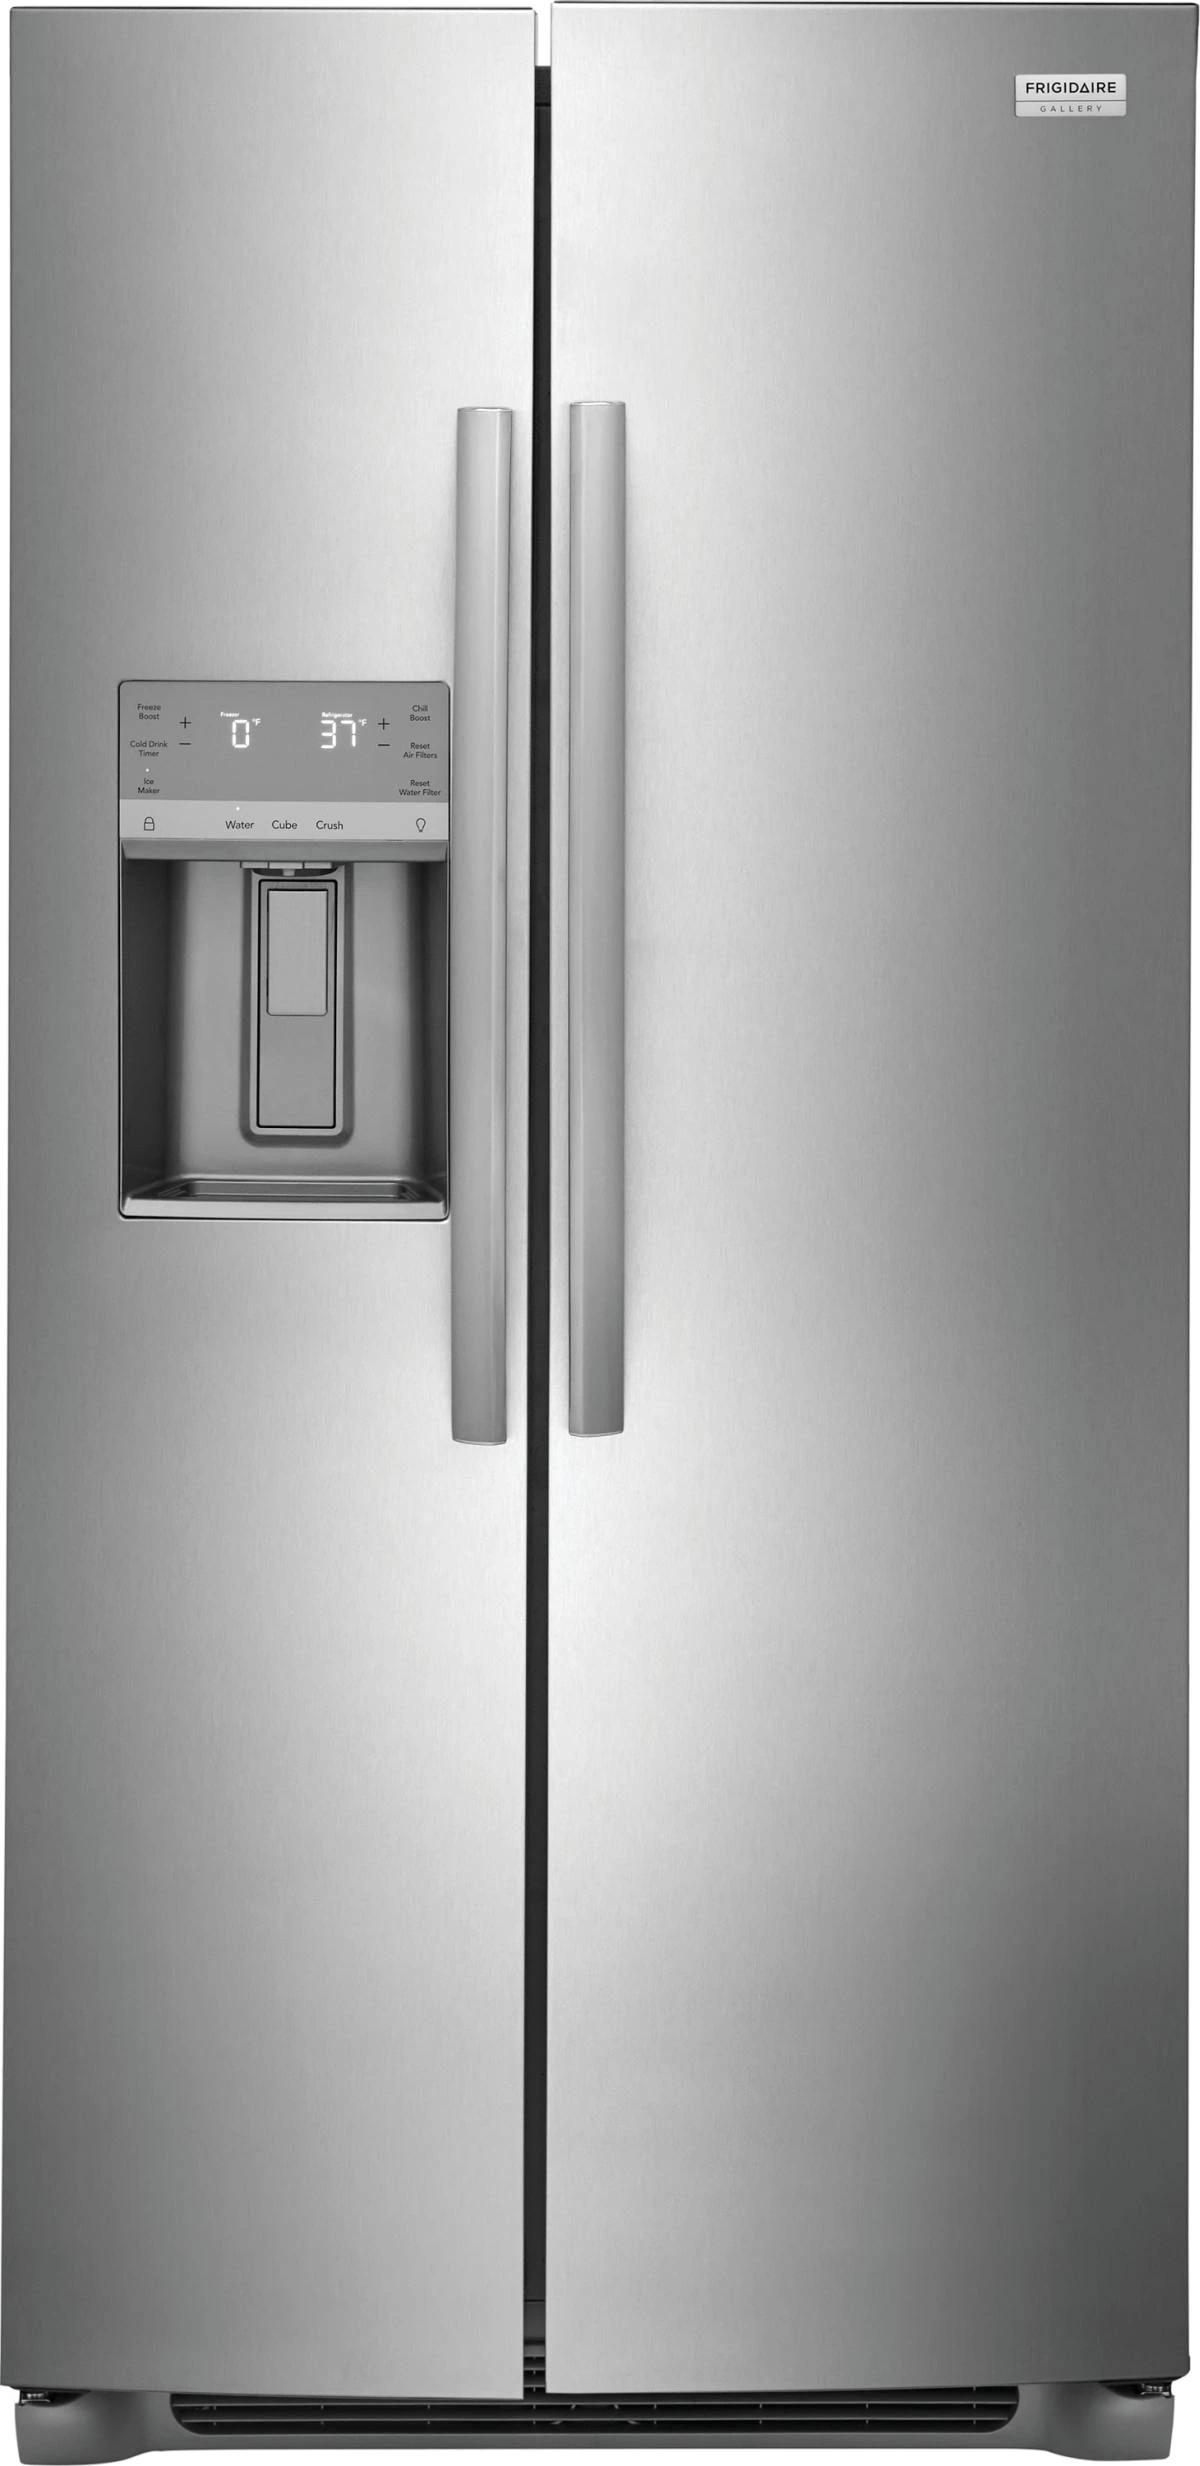 Frigidaire Refrigerator Buying Guide, Colder's